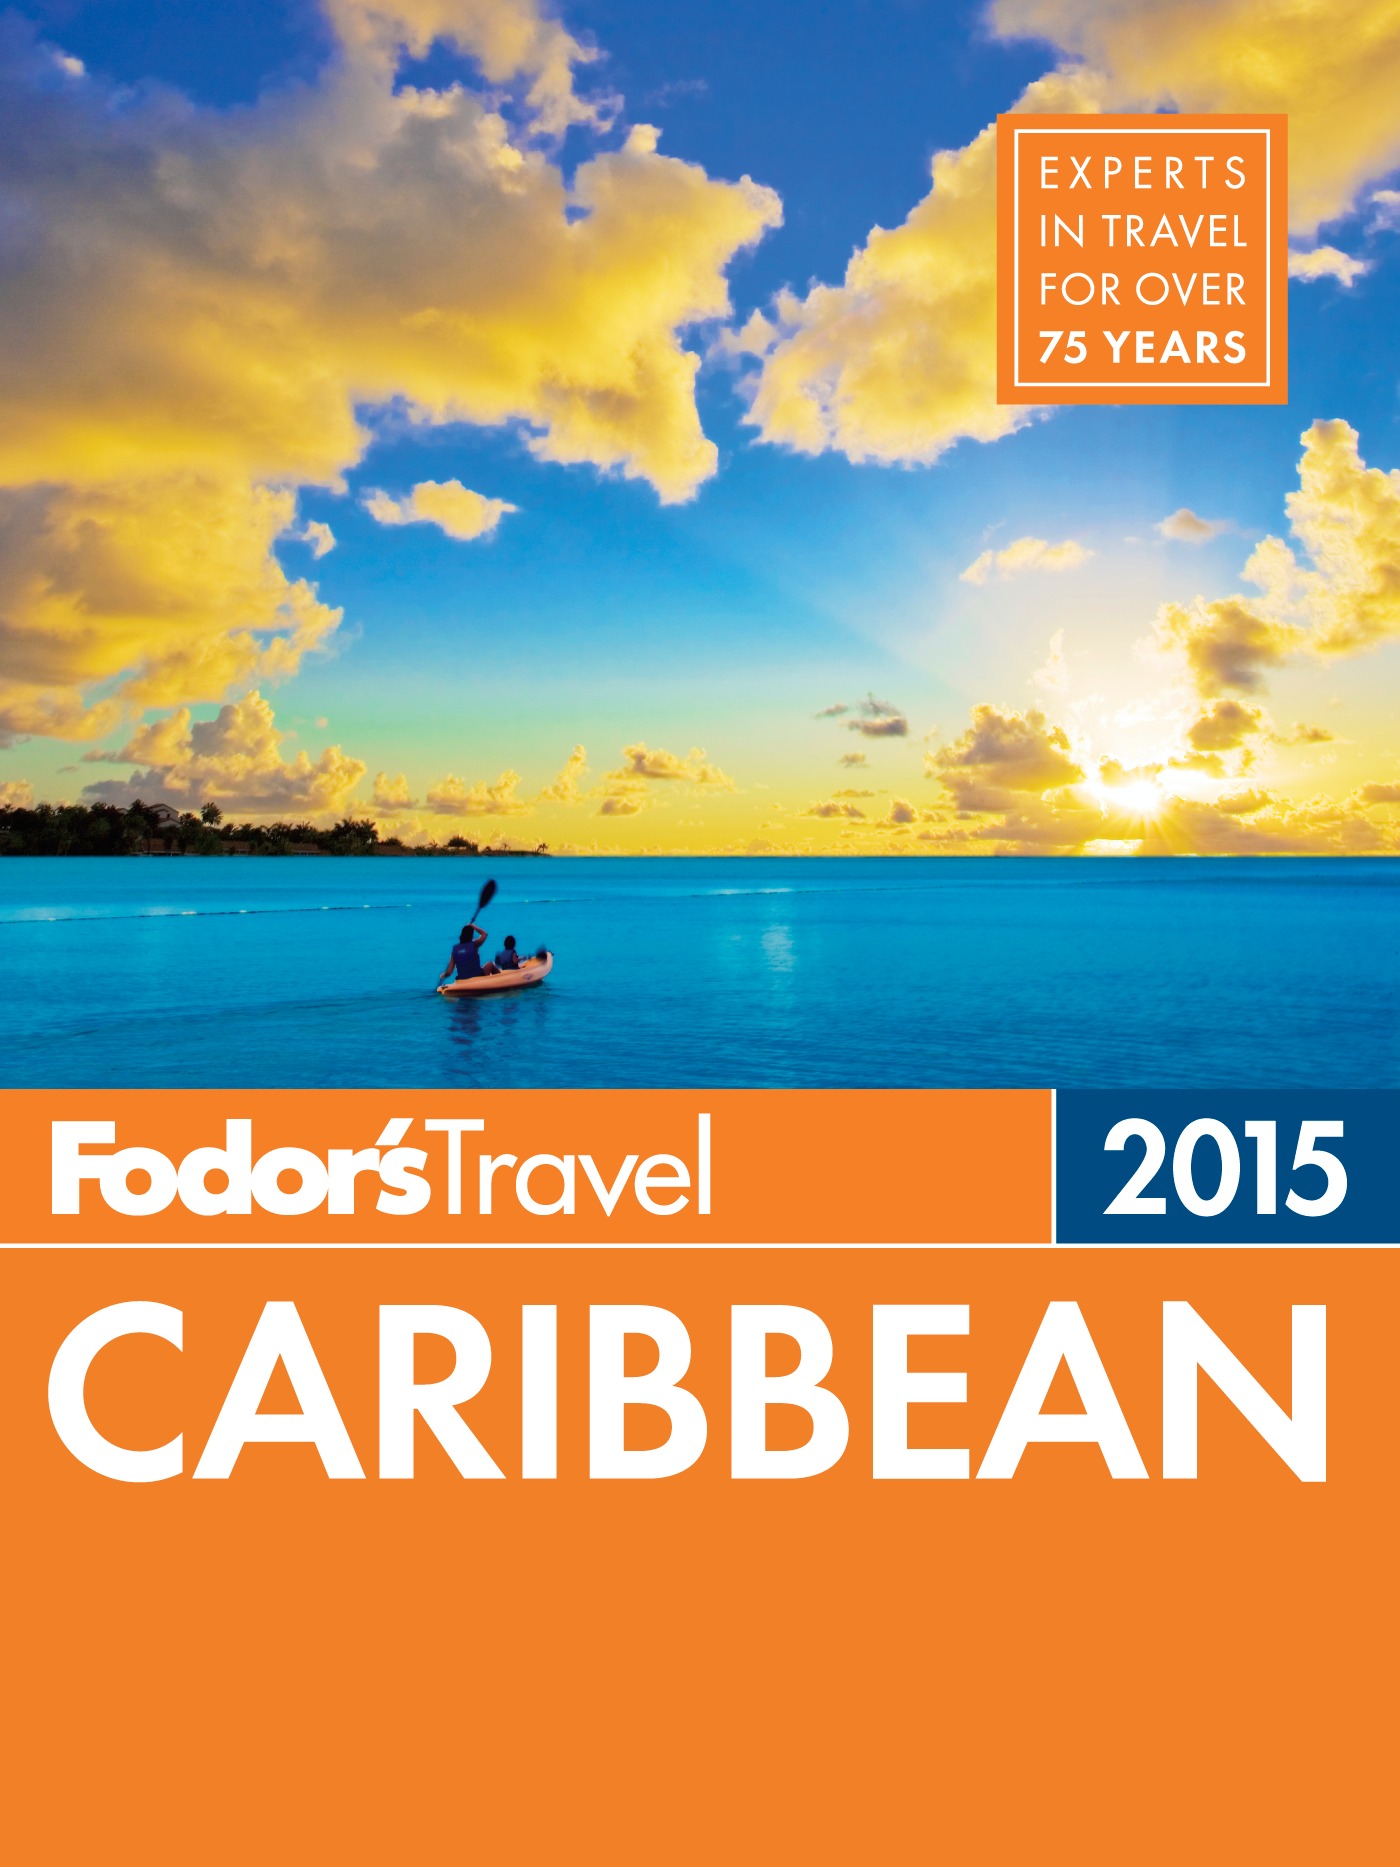 Fodor's Caribbean 2015 cover image